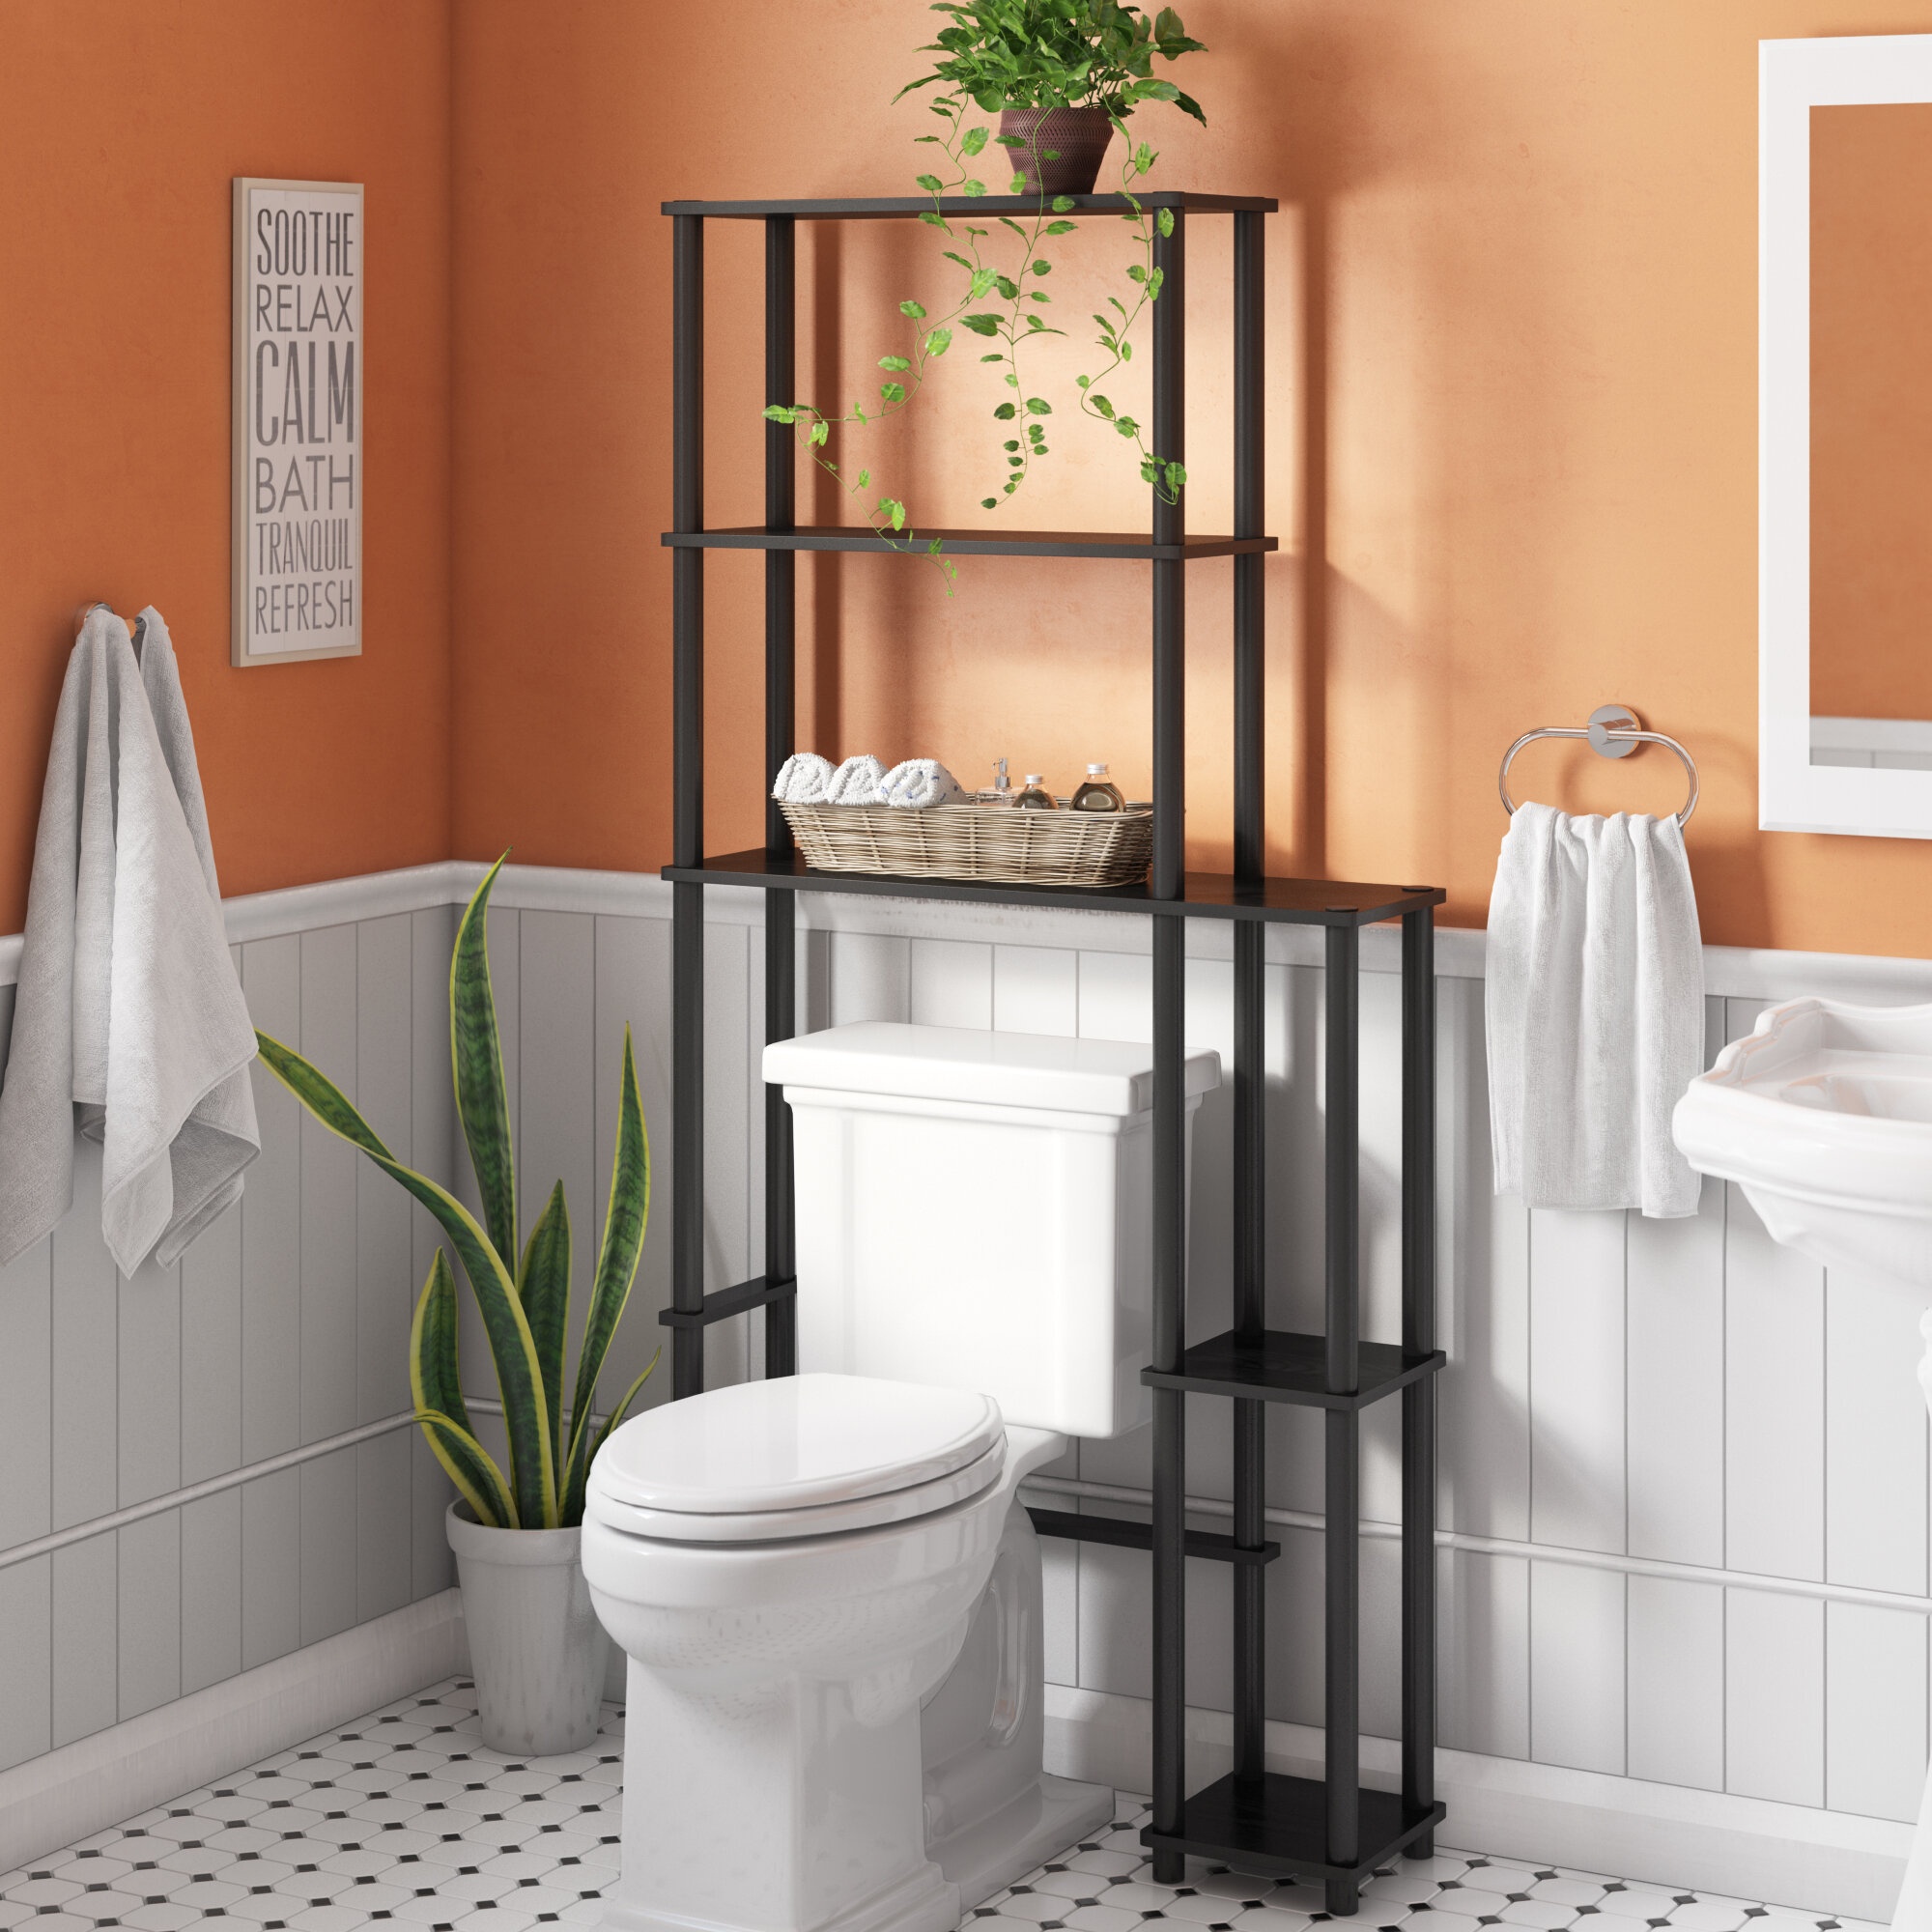 Utex 3 Tier Bathroom Shelf Wall Mounted with Towel Hooks, Bathroom Organizer Shelf Over The Toilet (Espresso)